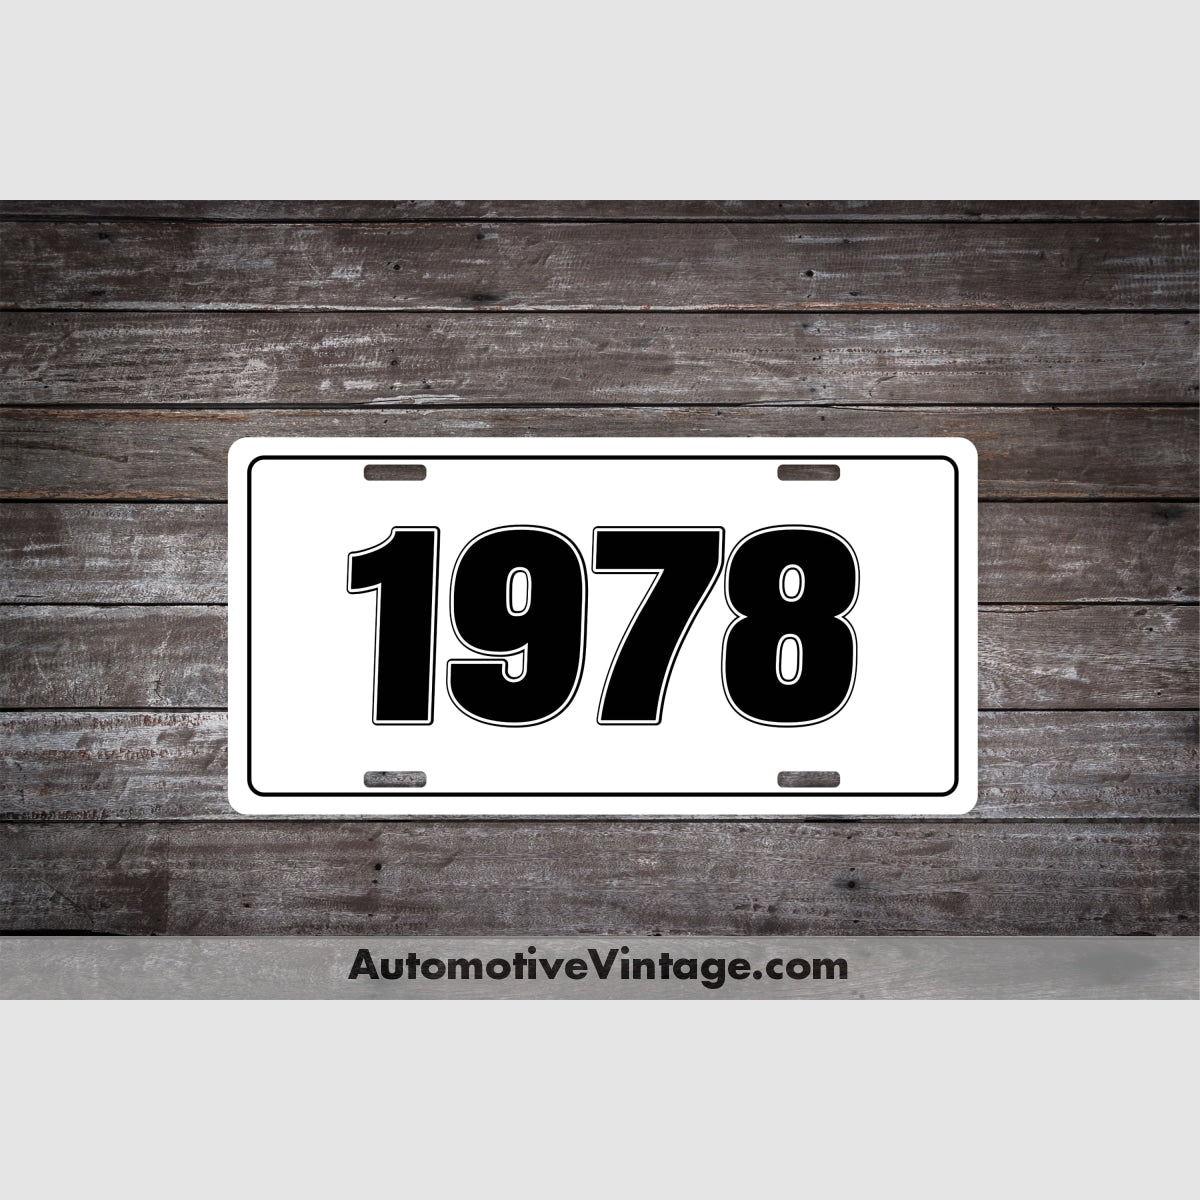 1978 Car Year License Plate